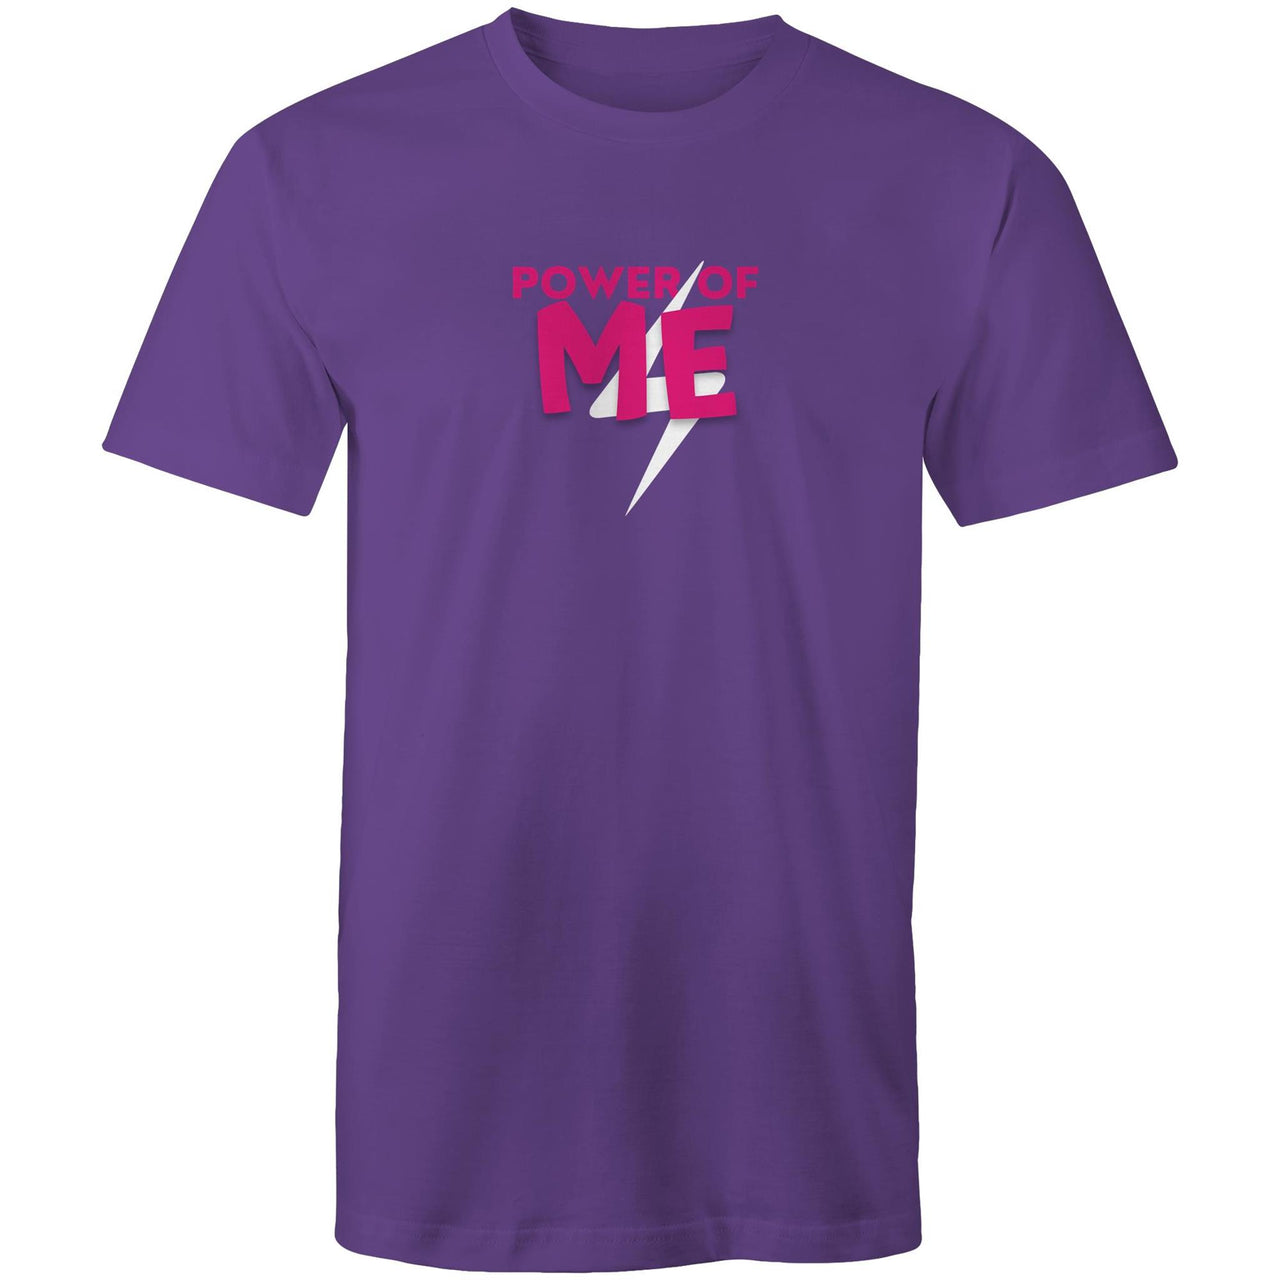 CBF Power of Me Crew T-Shirt purple by CBF Clothing